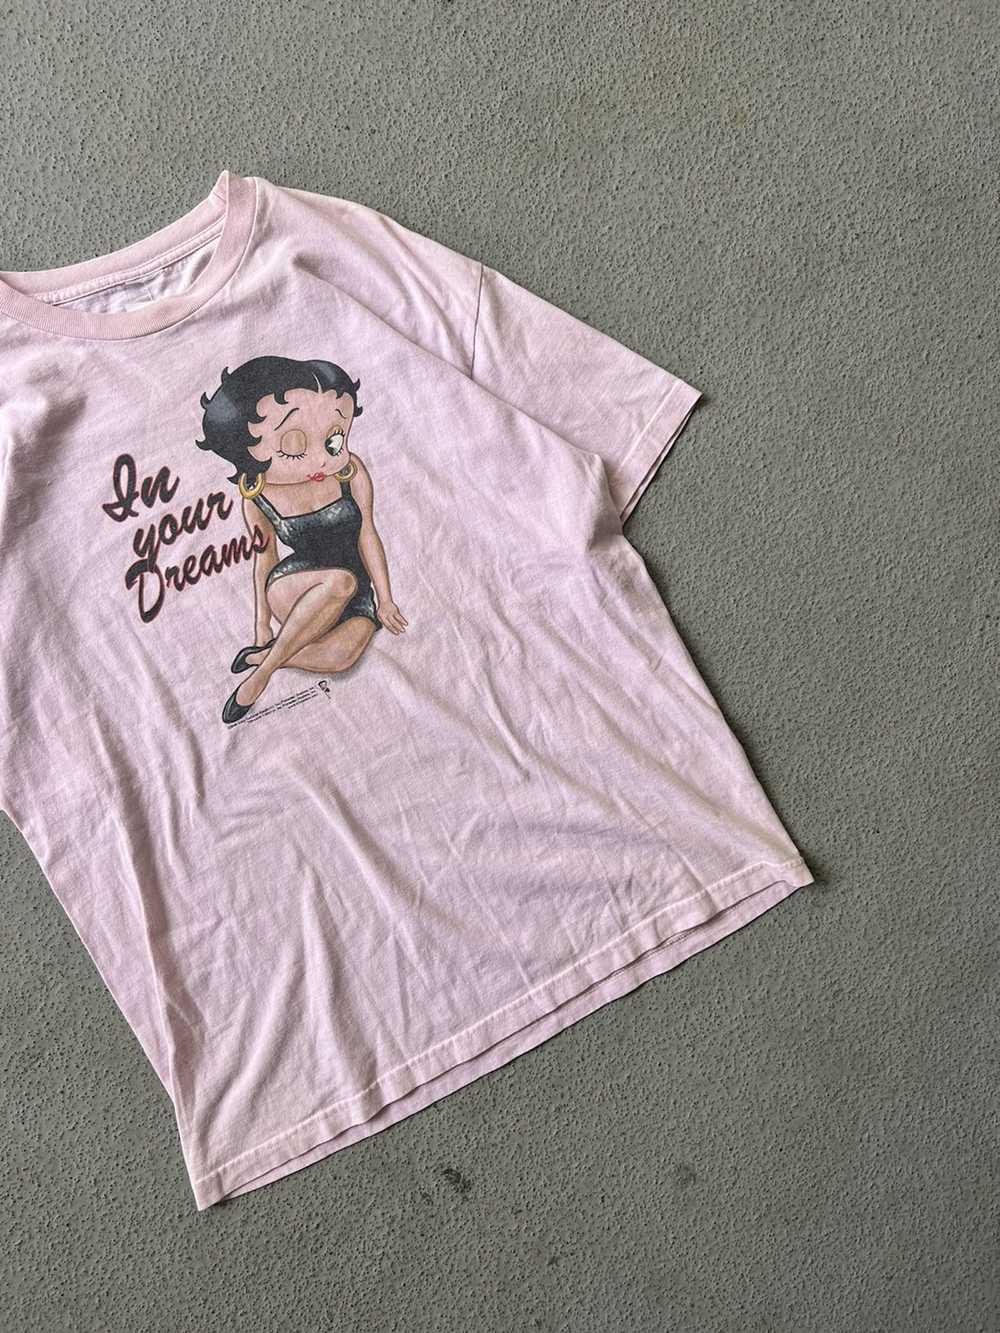 Vintage Vintage Betty Boop Shirt - image 3